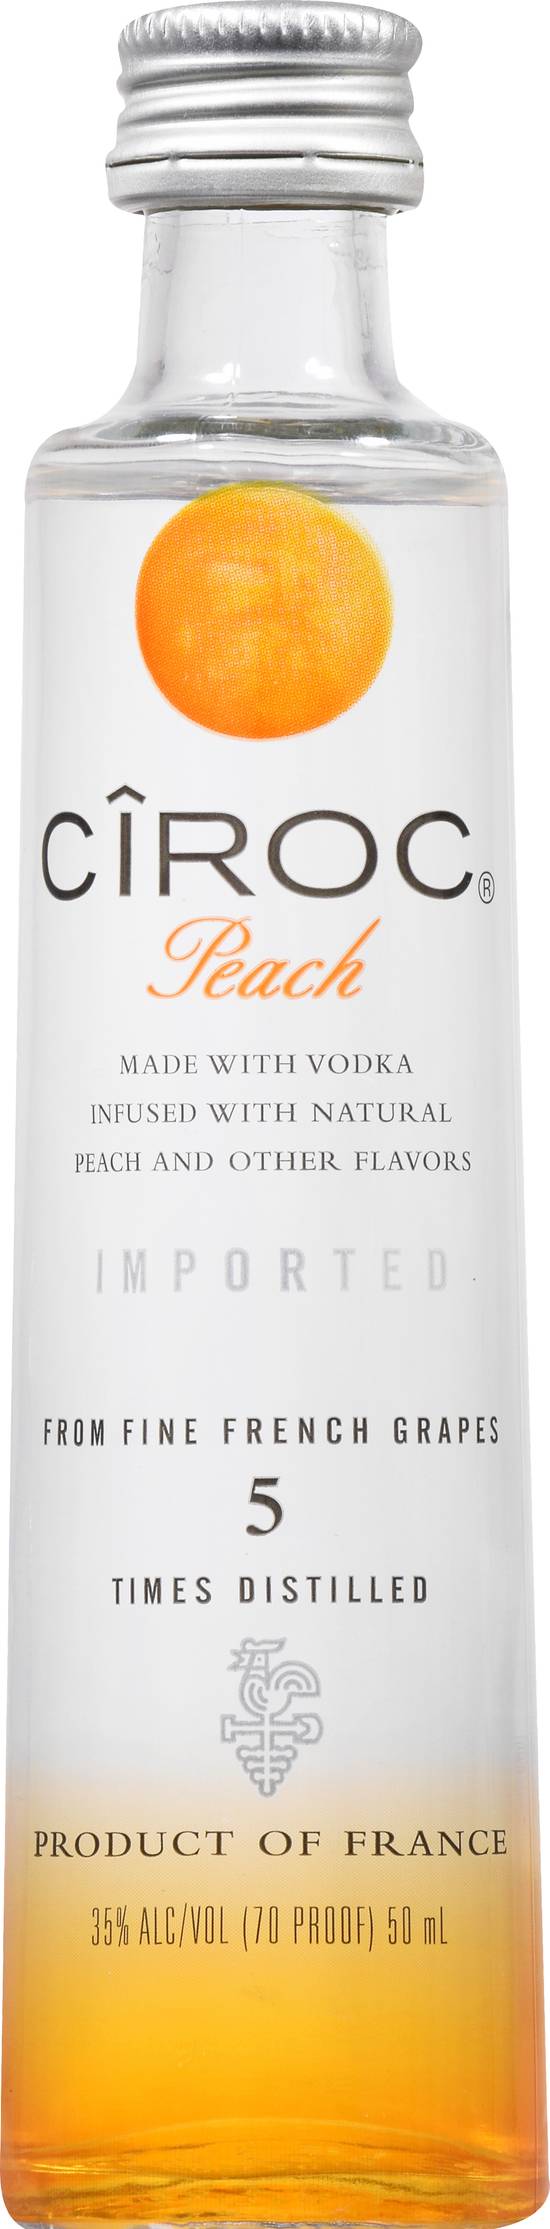 Ciroc Peach Vodka Liquor 70 Proof (50 ml)